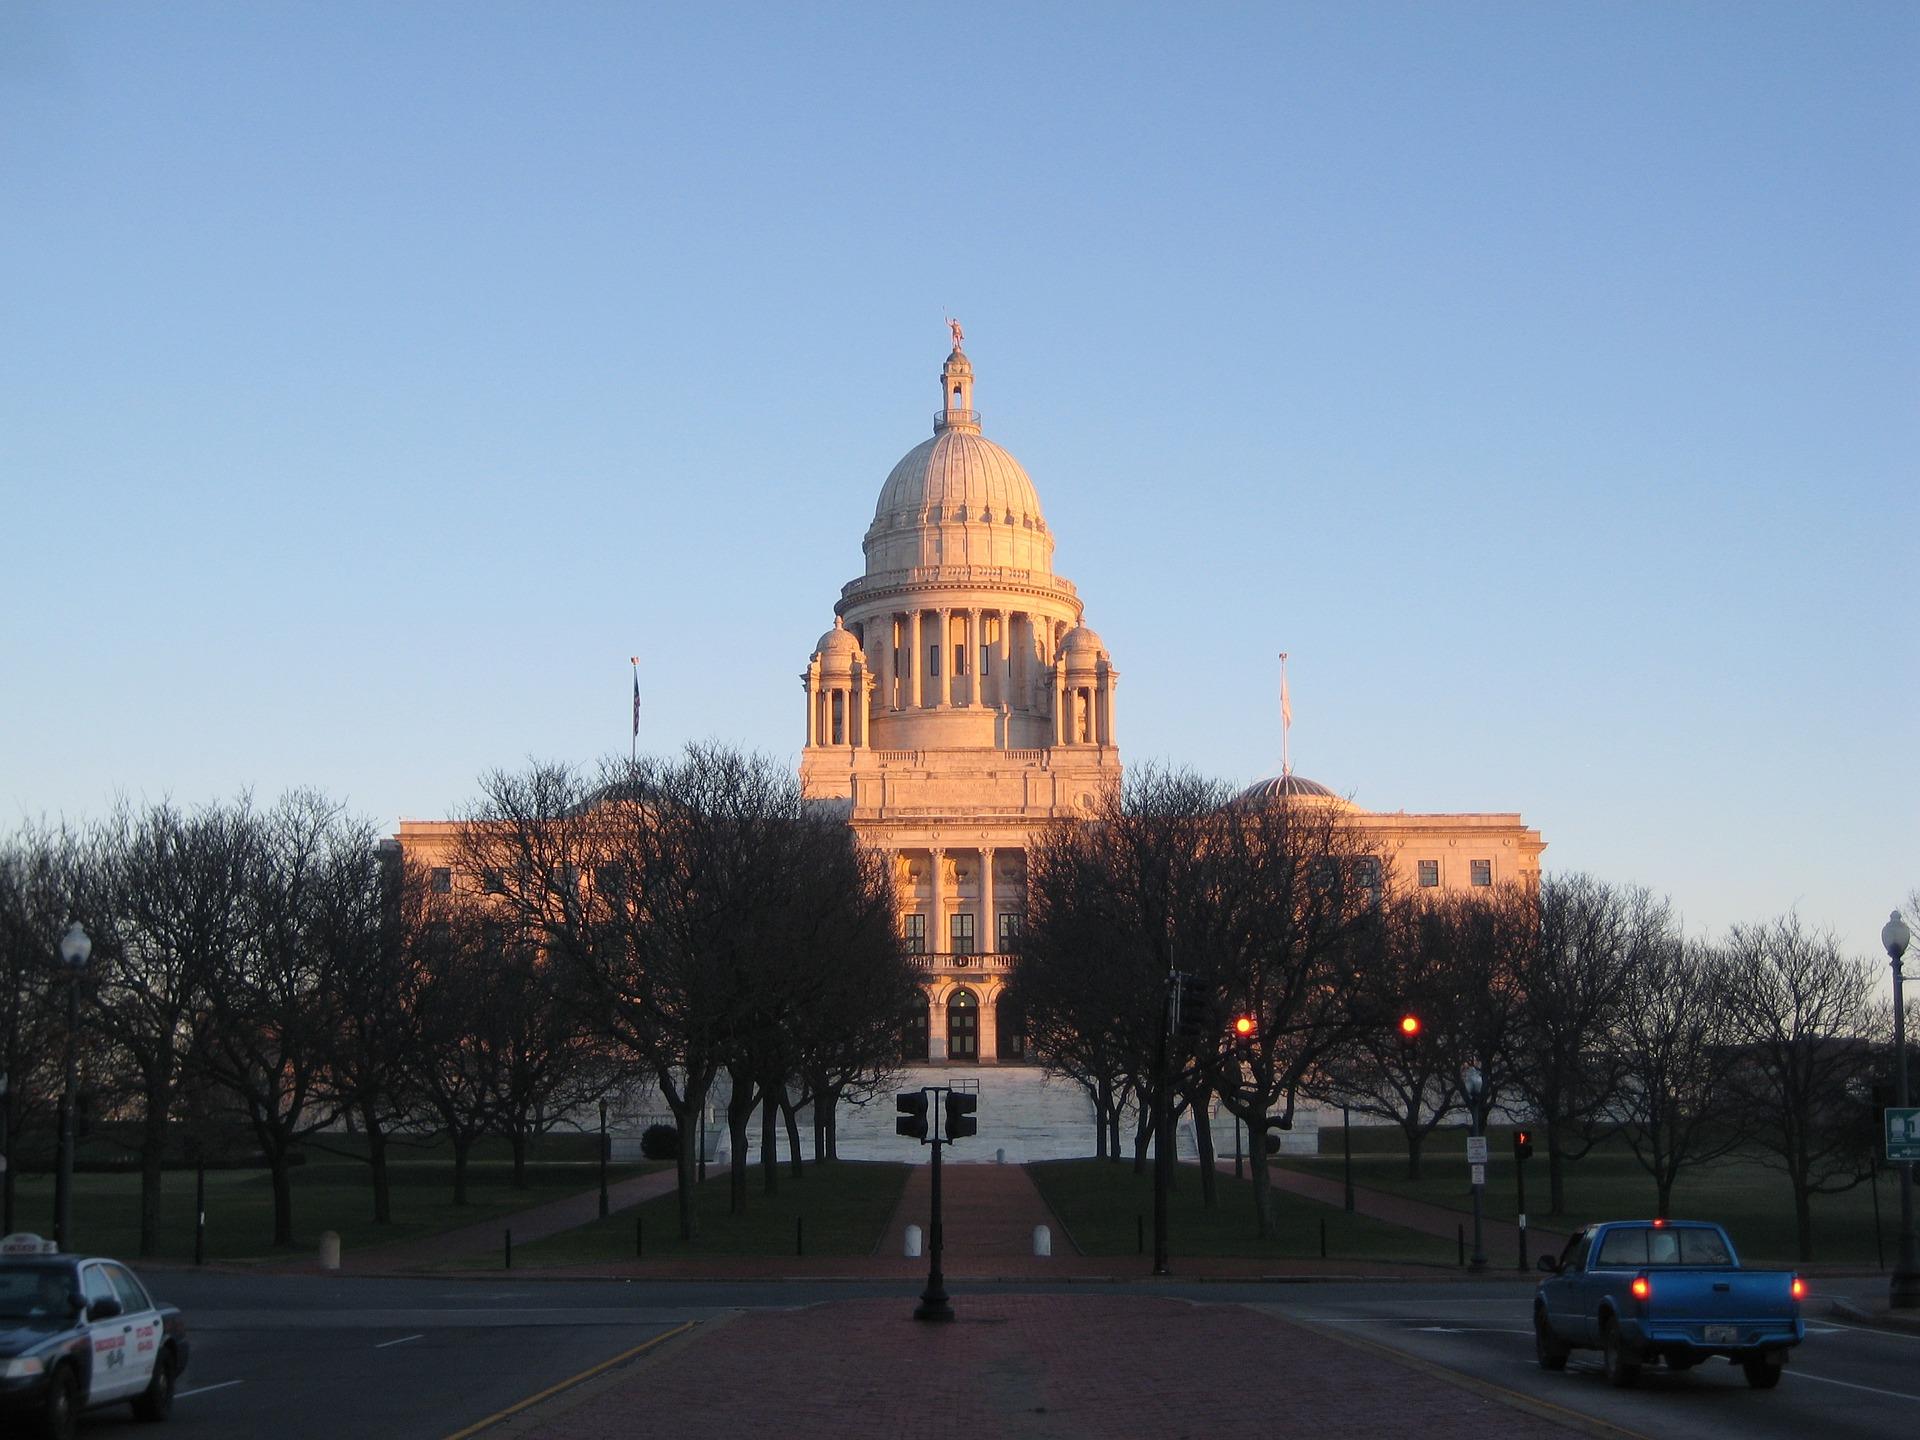 Rhode Island State House